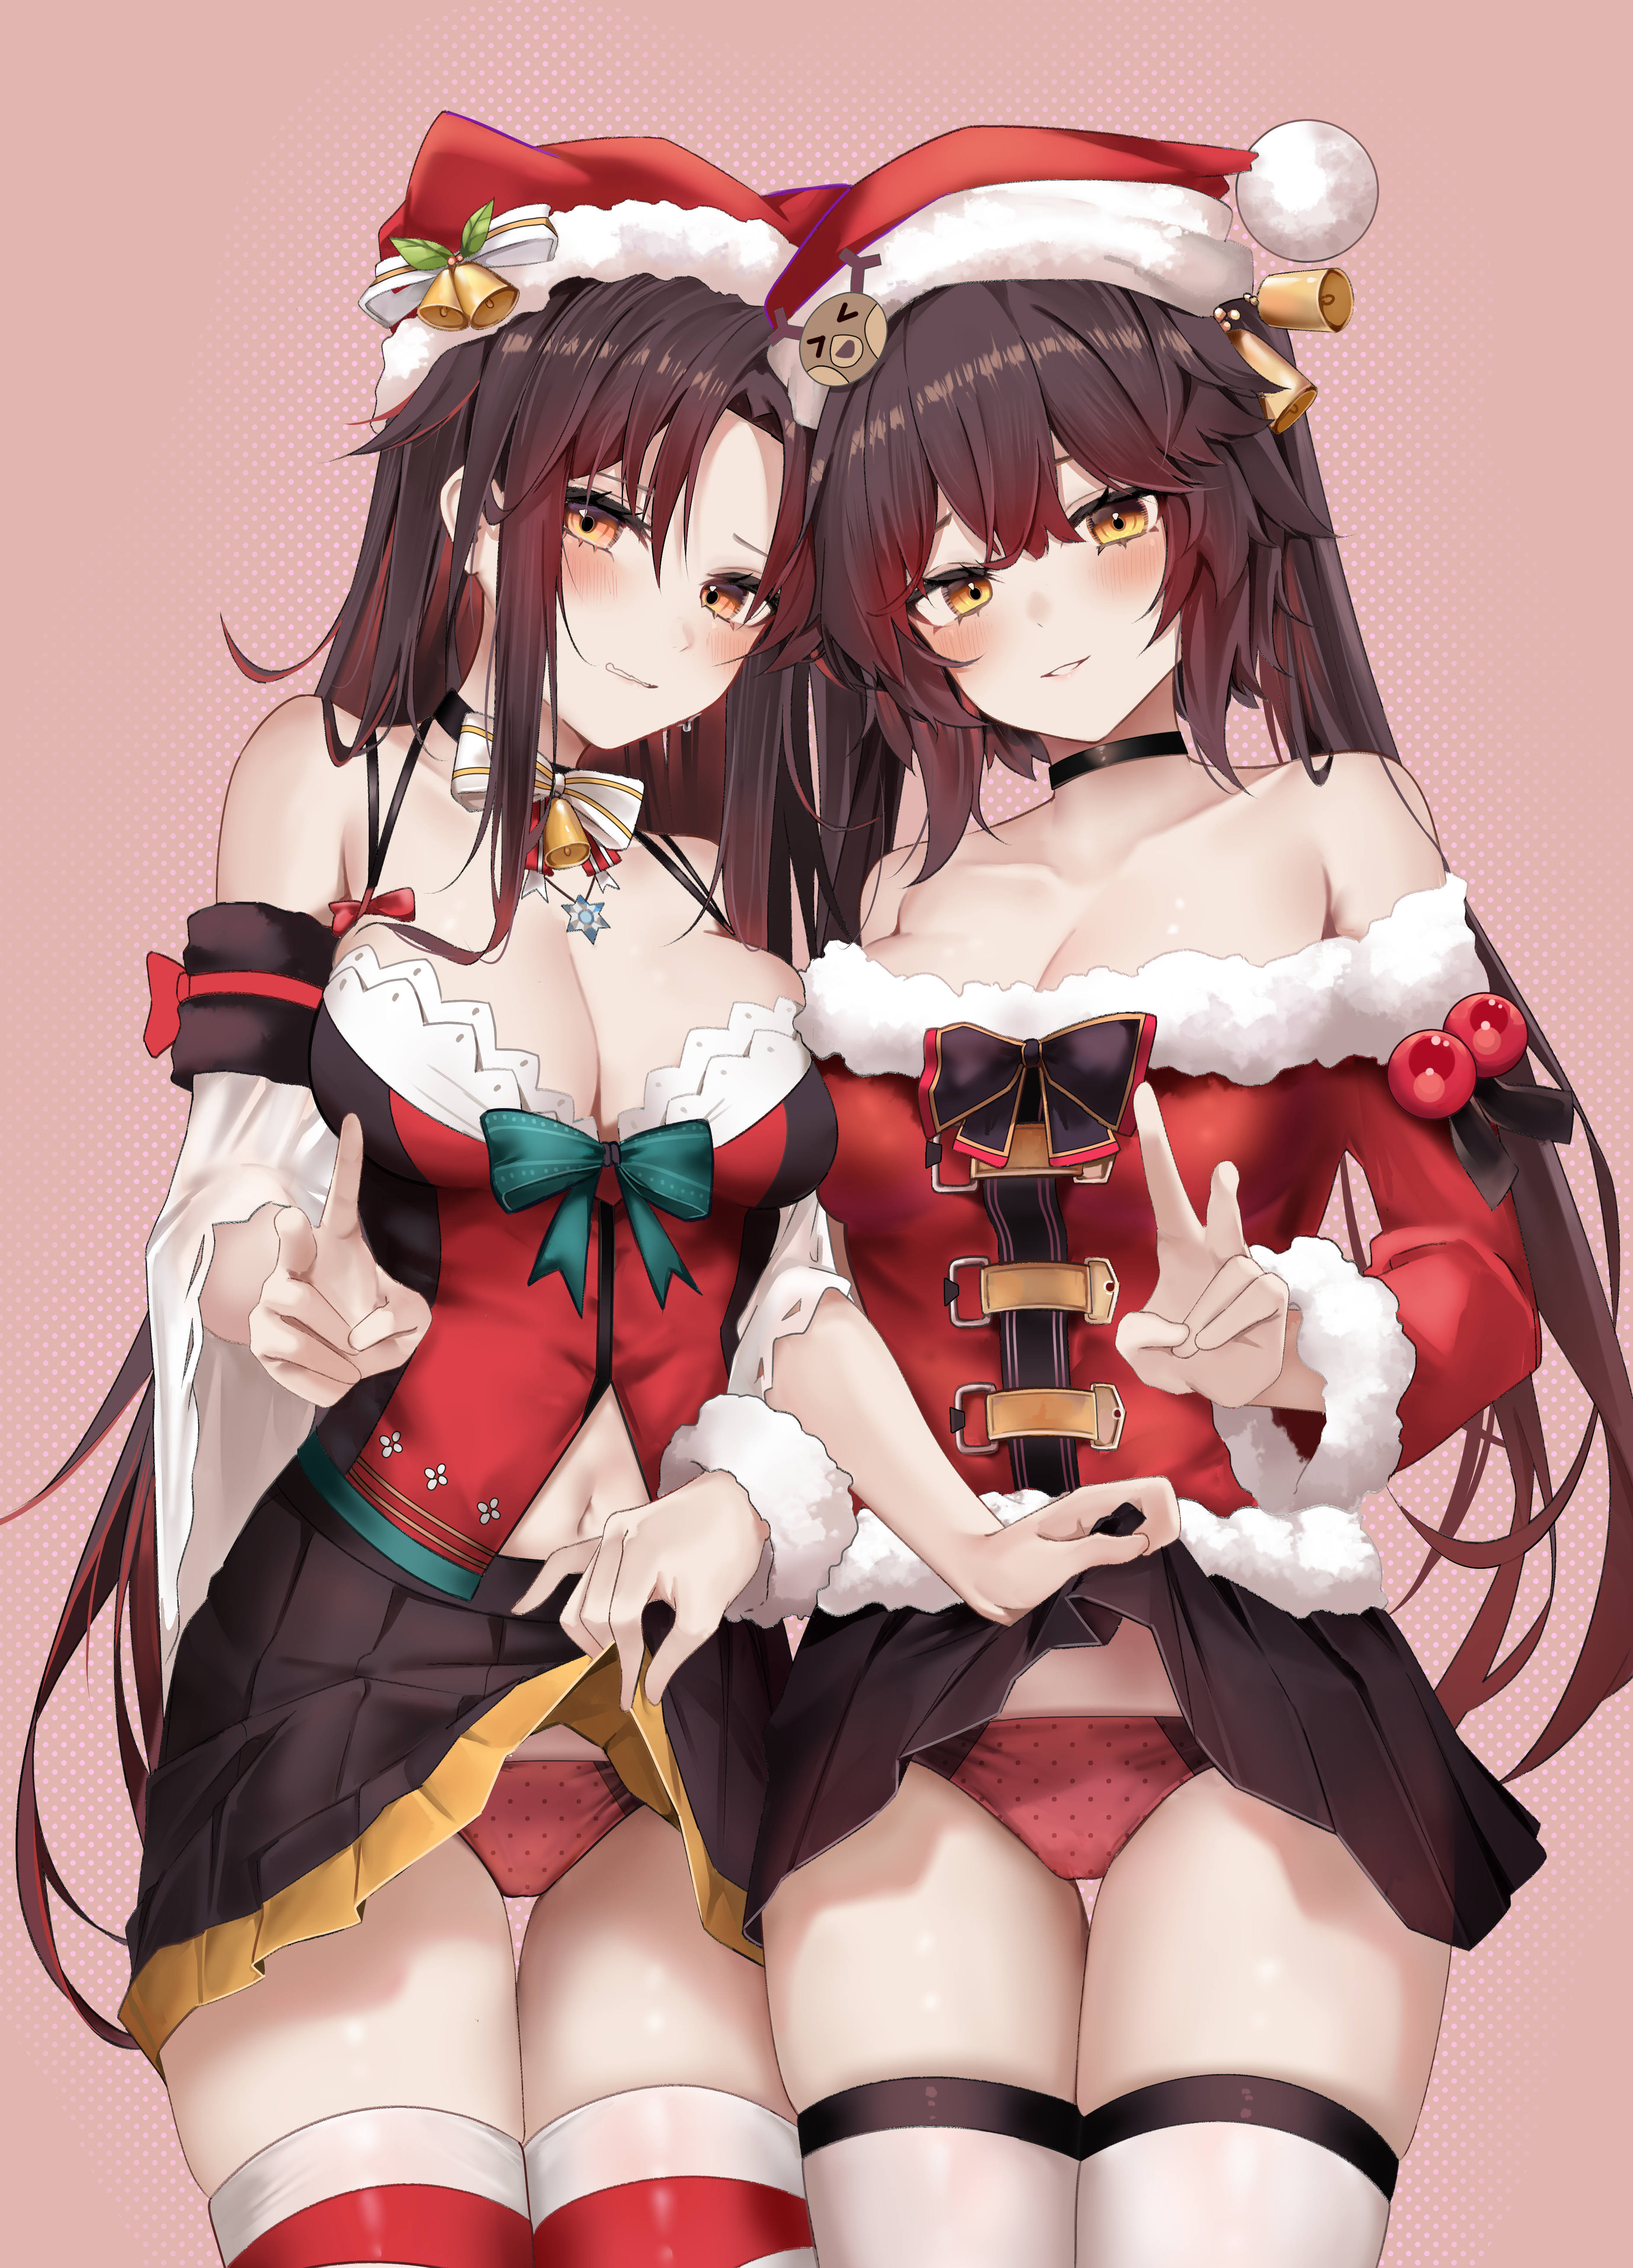 Anime 3774x5242 cleavage Girls Frontline m21 (Girls Frontline) christmas dress anime girls Christmas clothes lifting skirt panties victory sign Santa hats